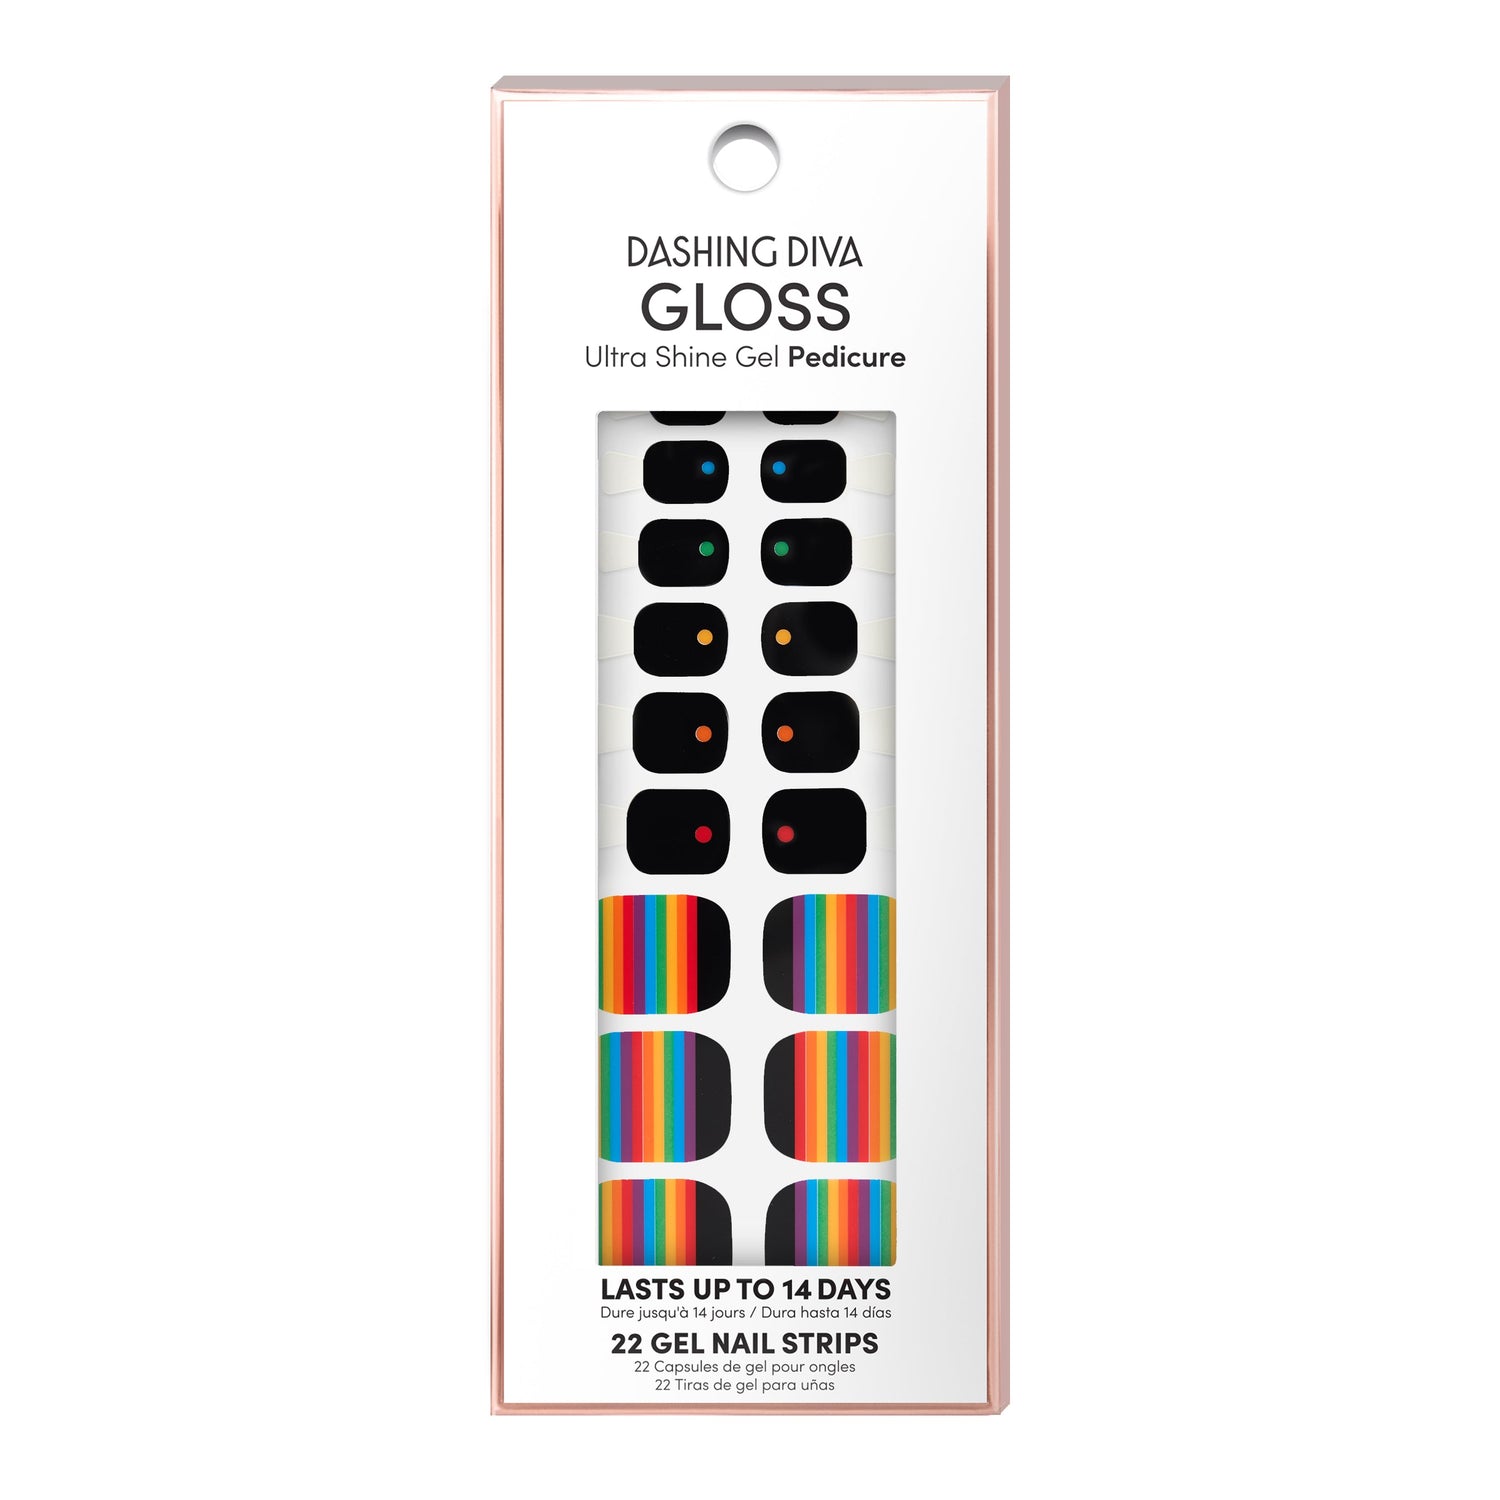 Dashing Diva GLOSS Pedicure black gel pedi strips with rainbow Pride details.